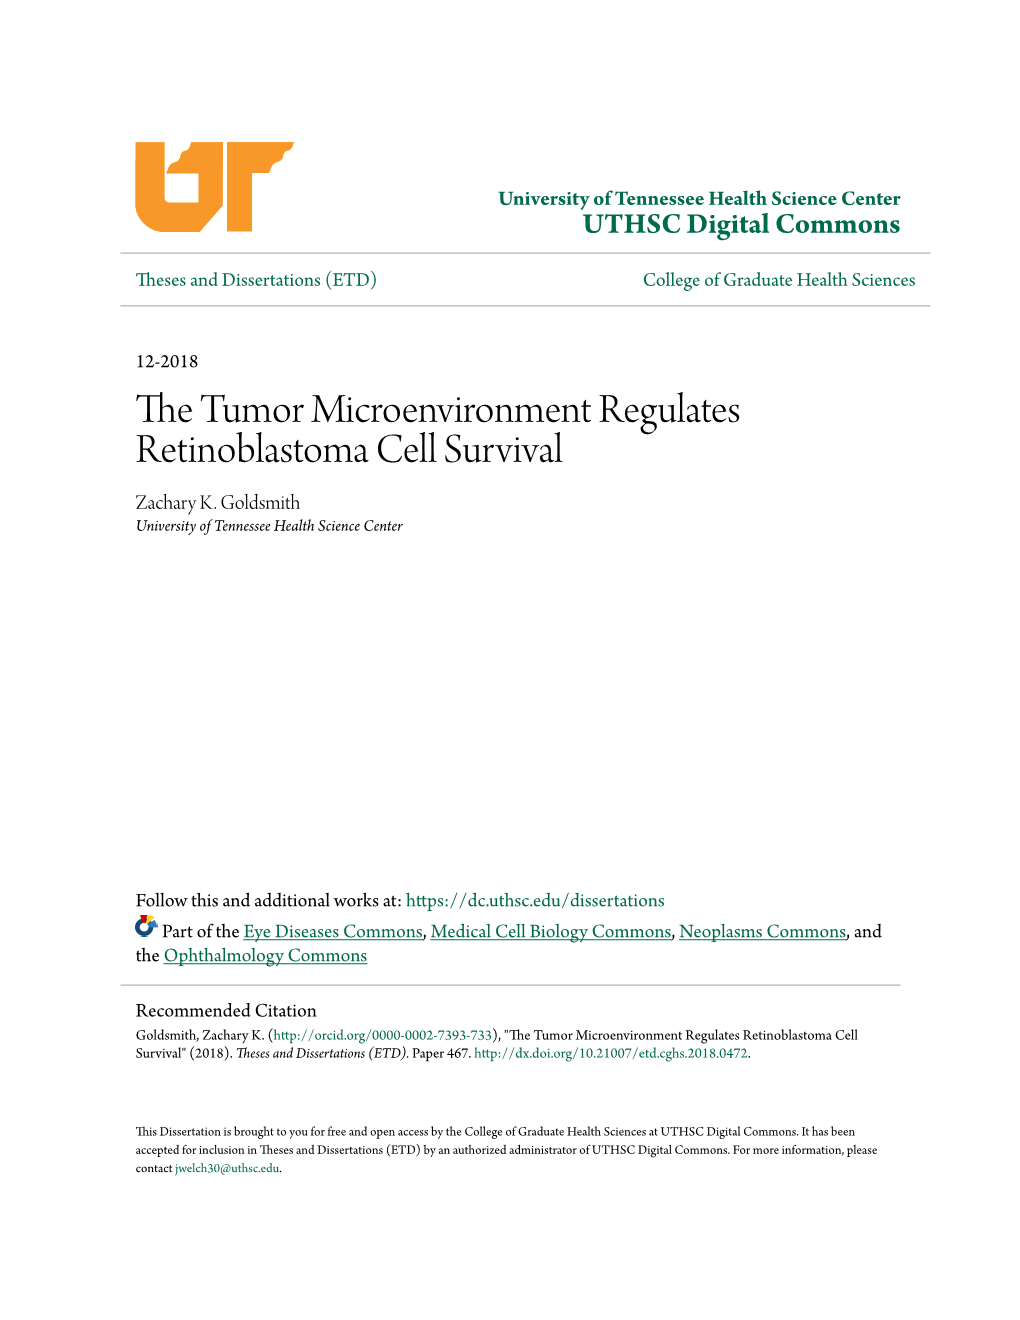 The Tumor Microenvironment Regulates Retinoblastoma Cell Survival